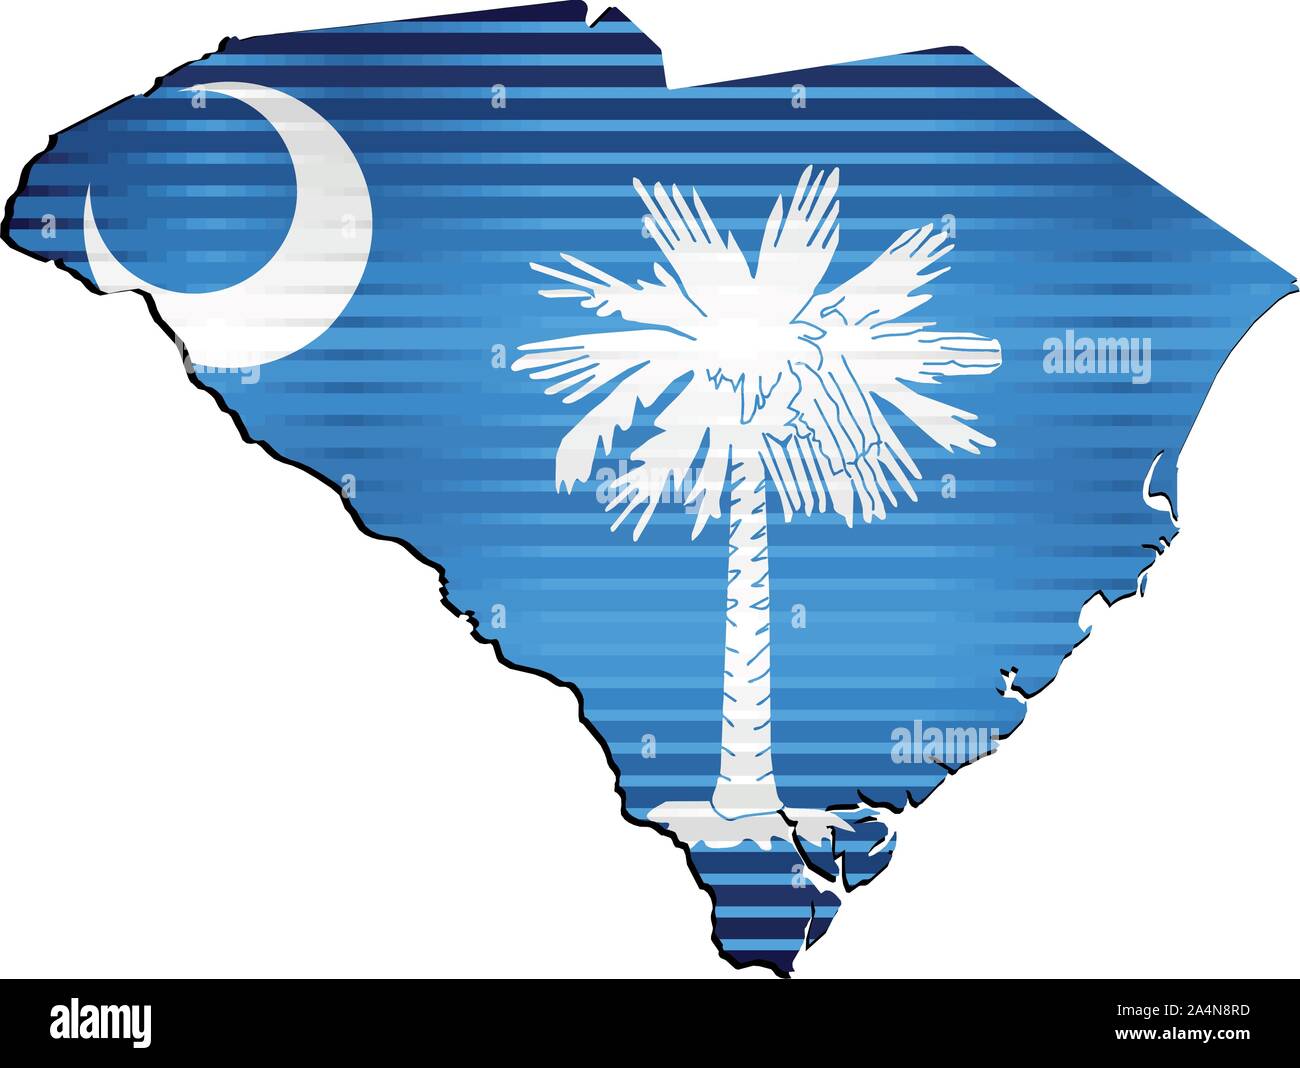 Glänzend Grunge Karte der South Carolina - Illustration, dreidimensionale Karte von South Carolina Stock Vektor